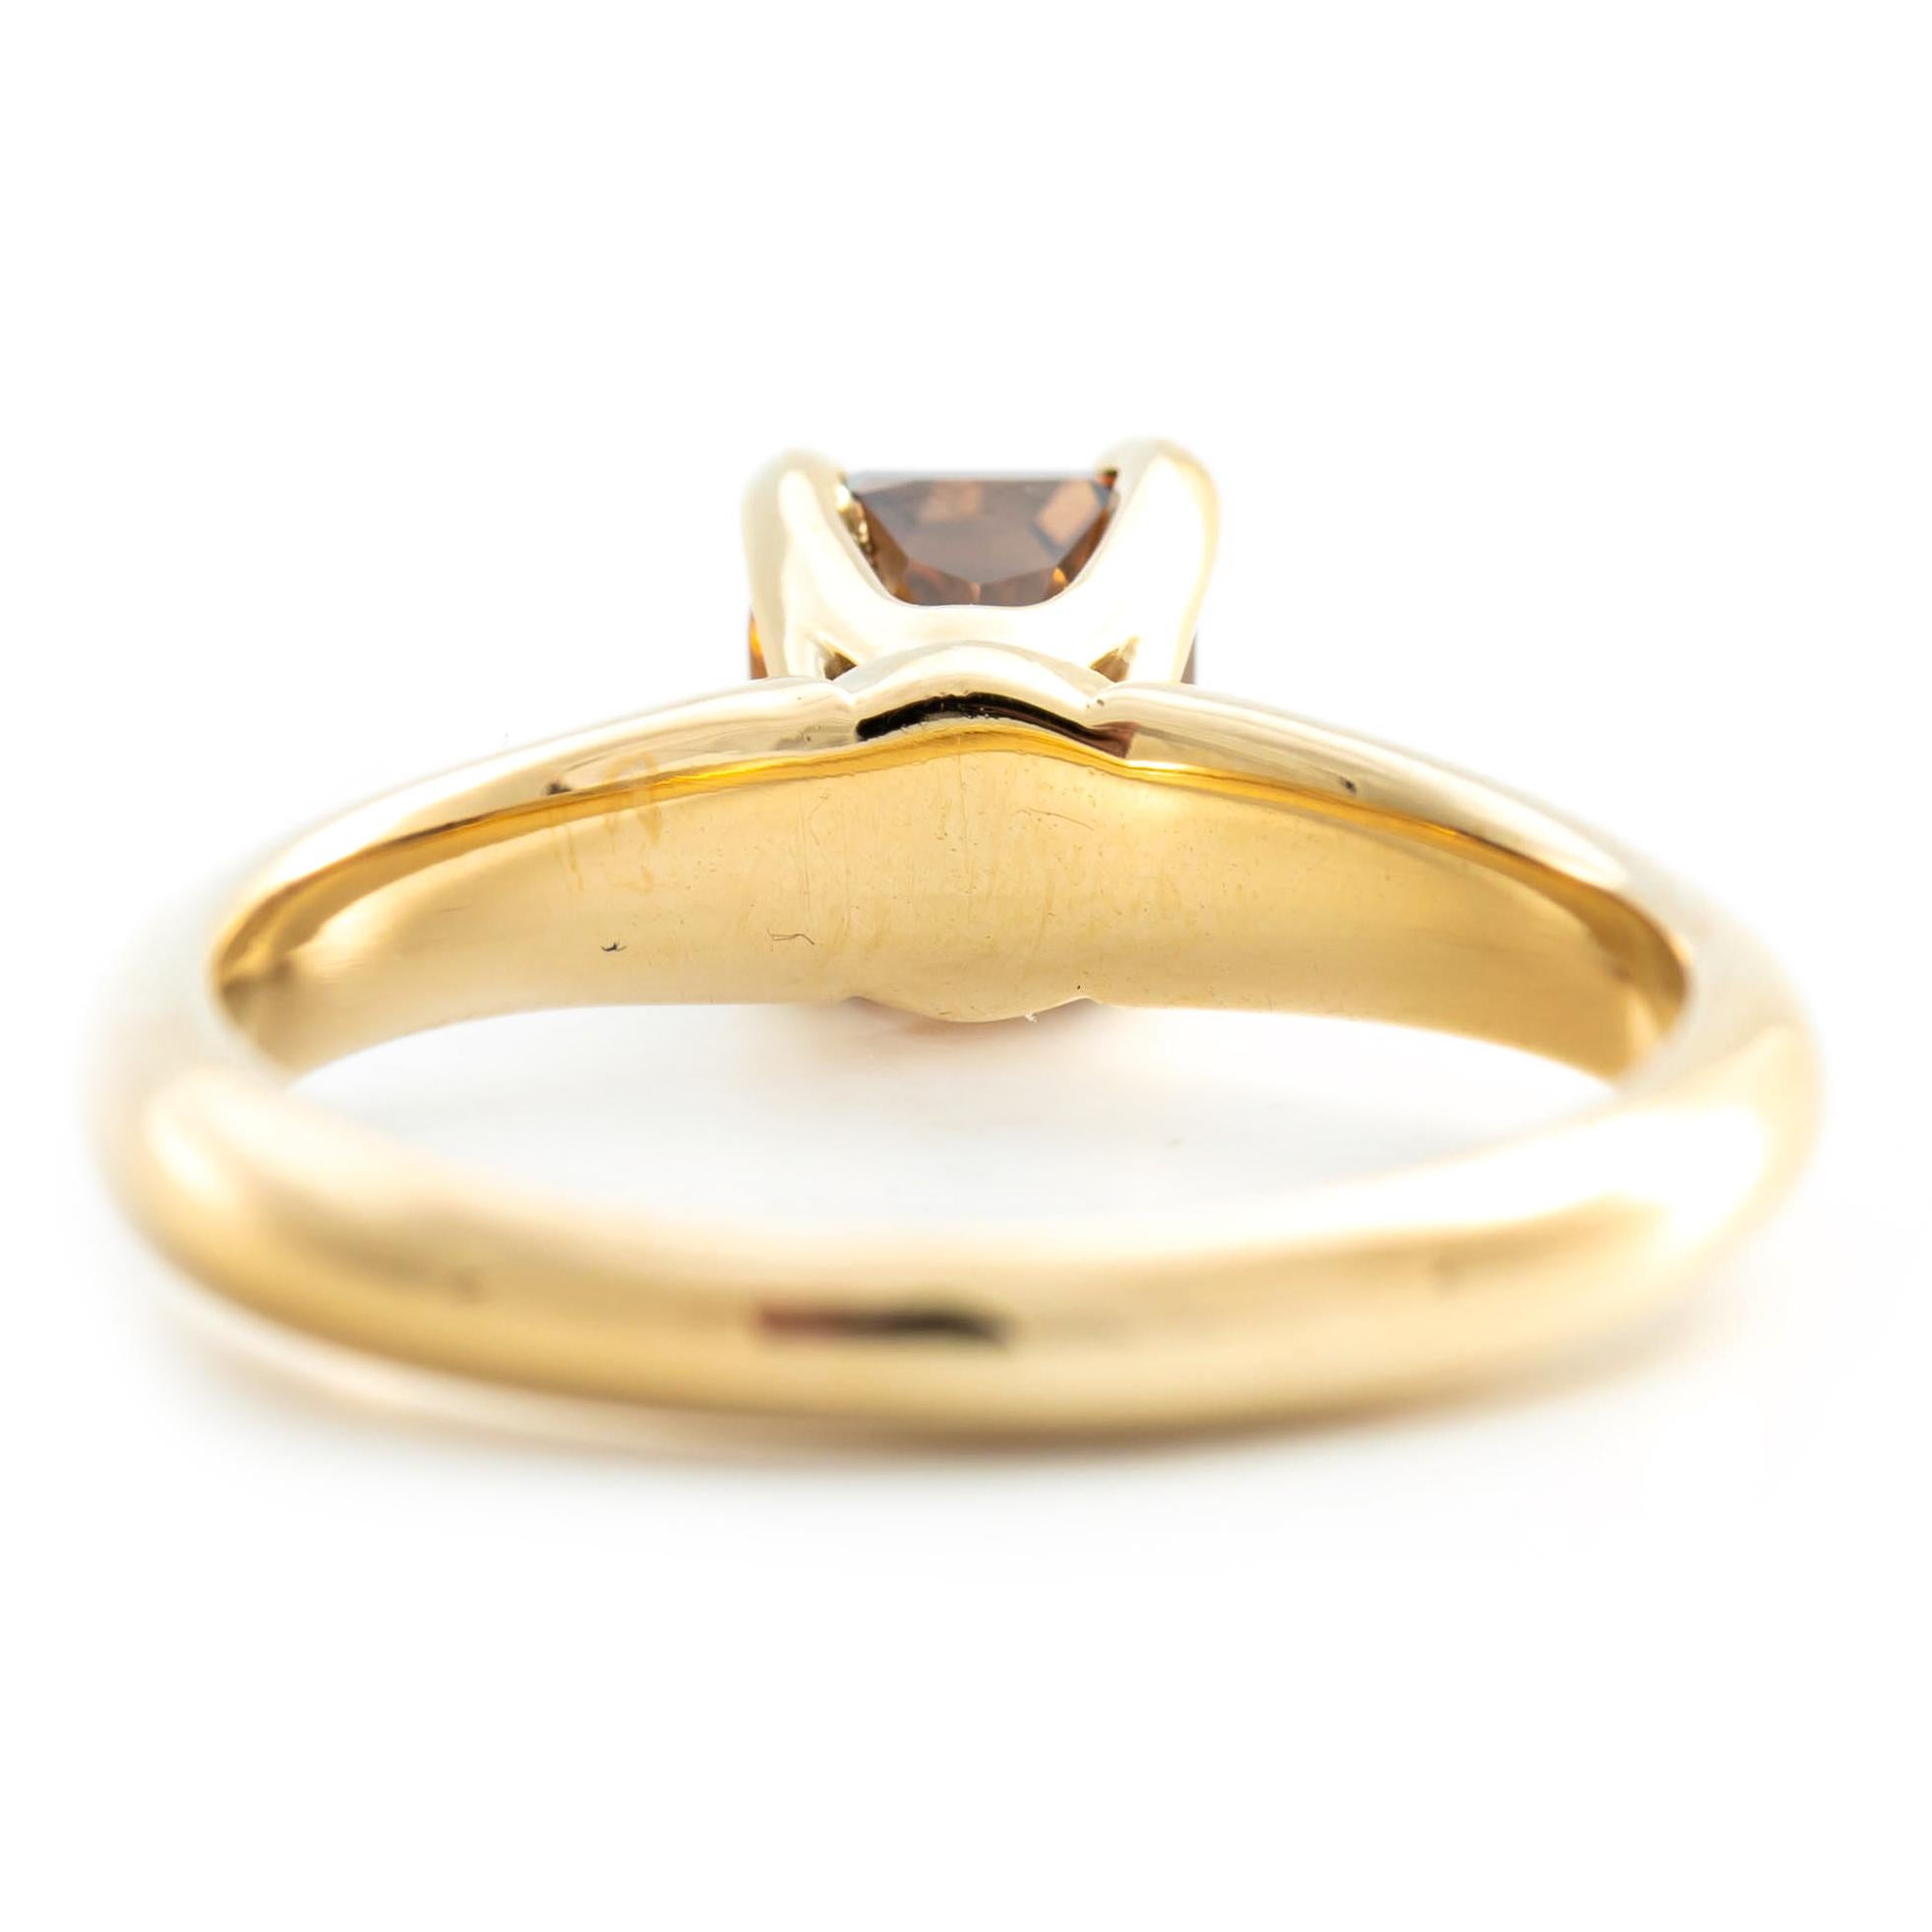 Women's 1.00 ct Natural Fancy Deep Brownish Orange Diamond Ring, No Reserve Price